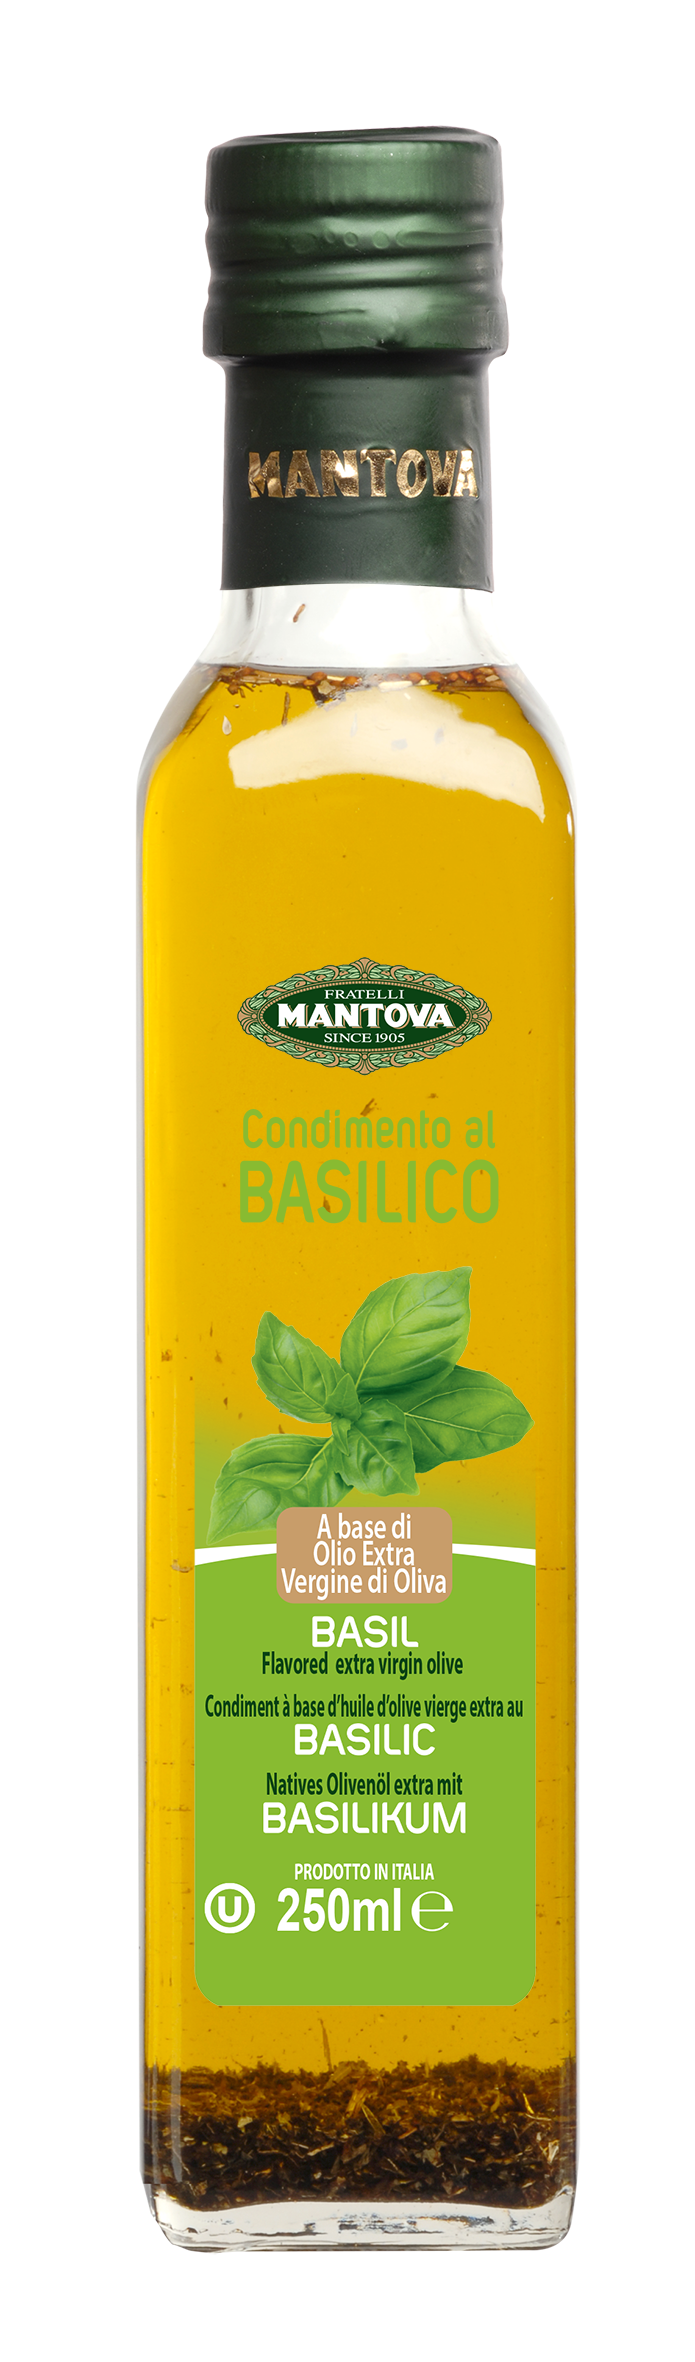 Basil Flavored Extra Virgin Olive Oil Mantova 250ml